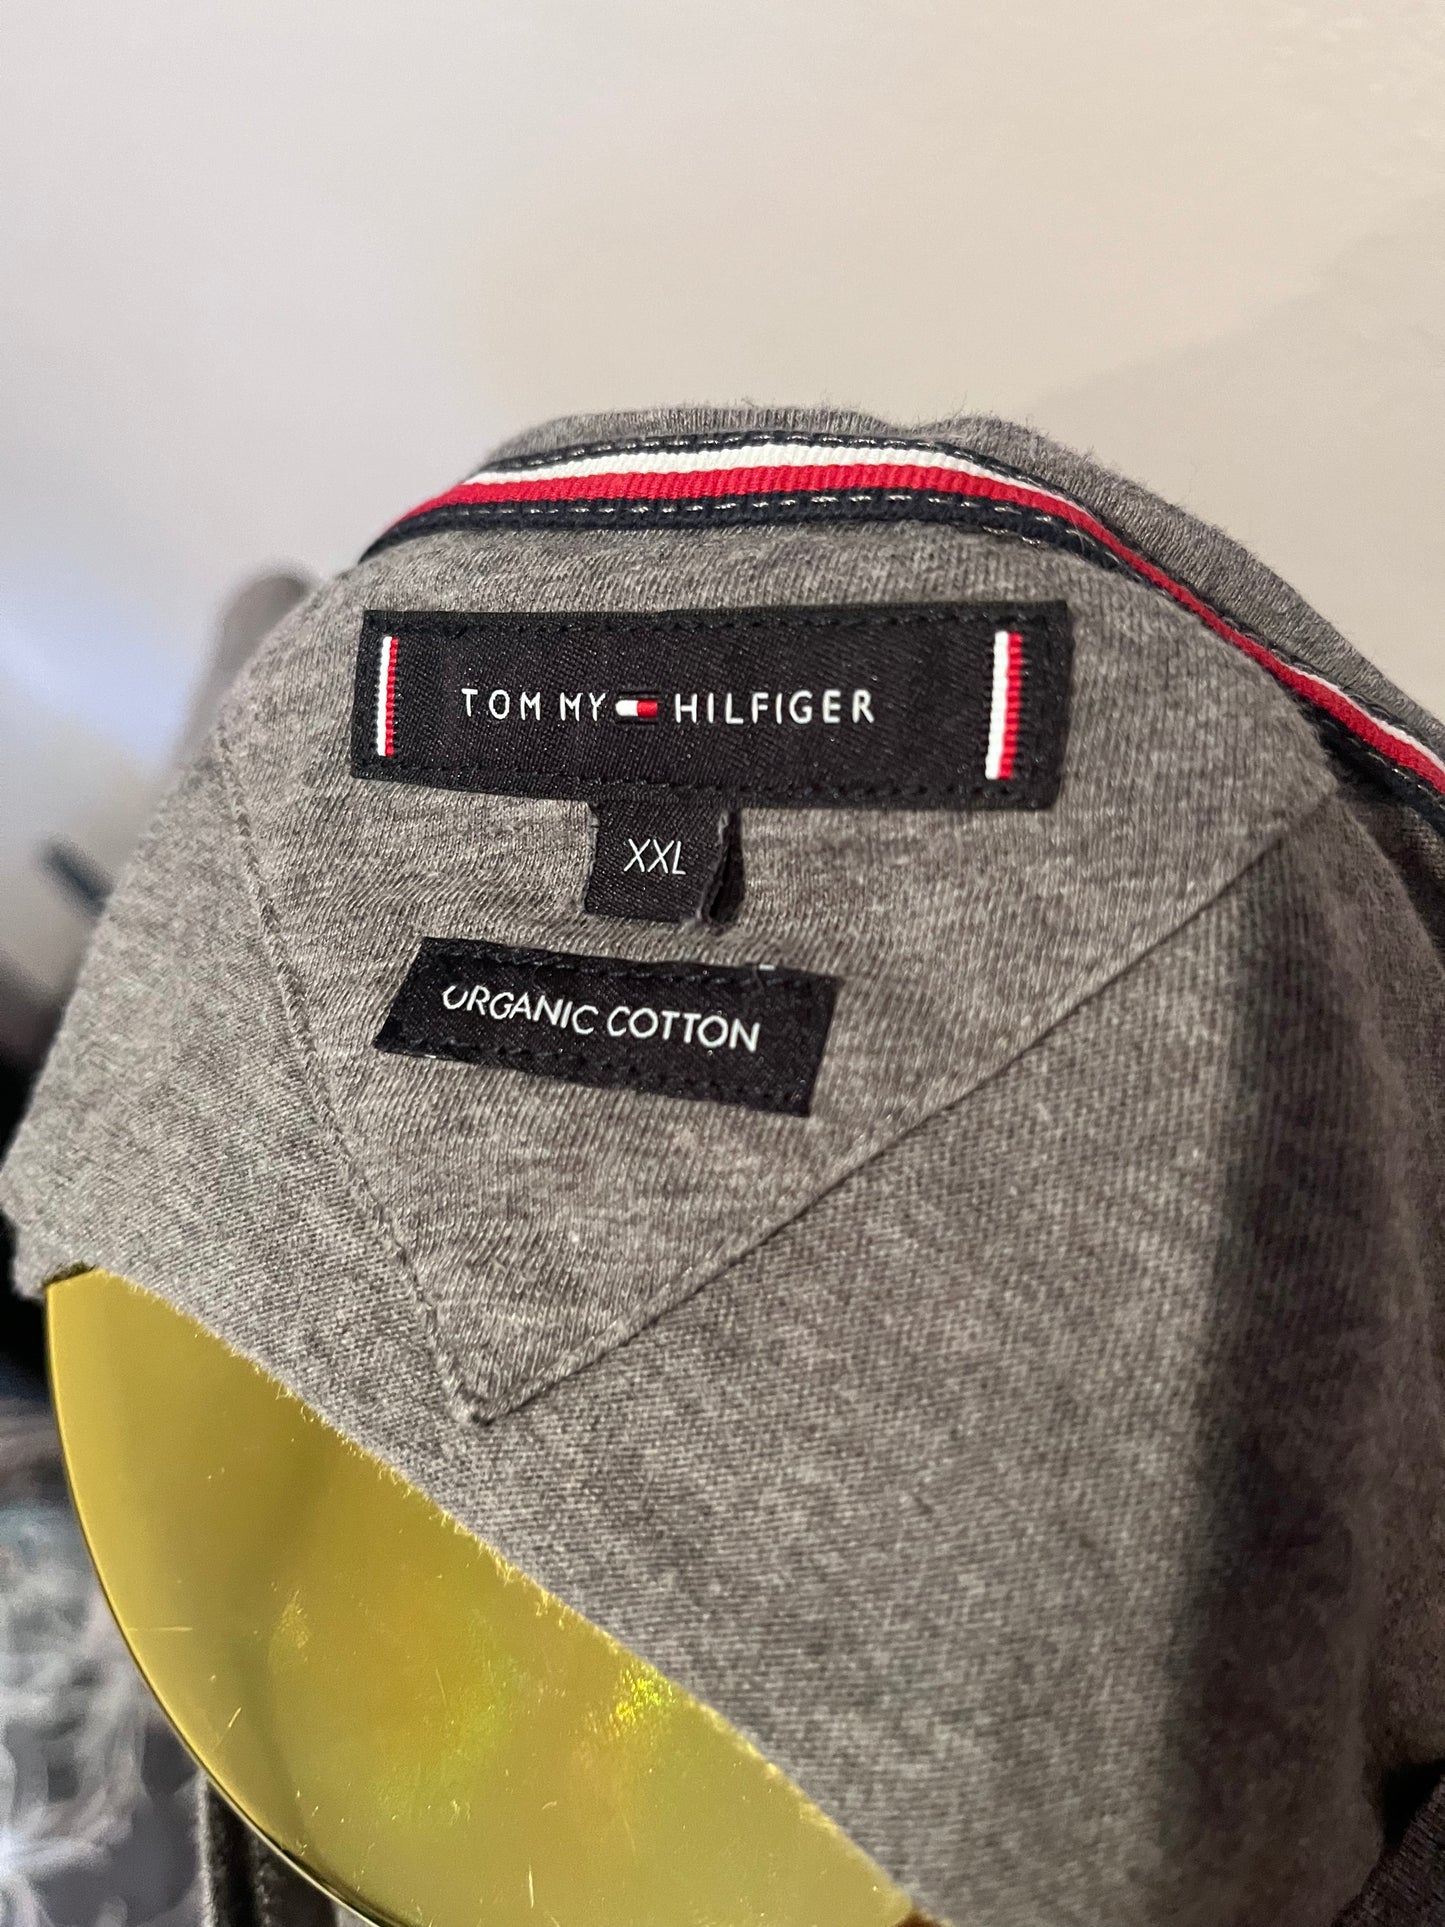 Tommy Hilfiger 100% Organic Cotton Grey Logo Print Tee Size XXL fits more like an XL